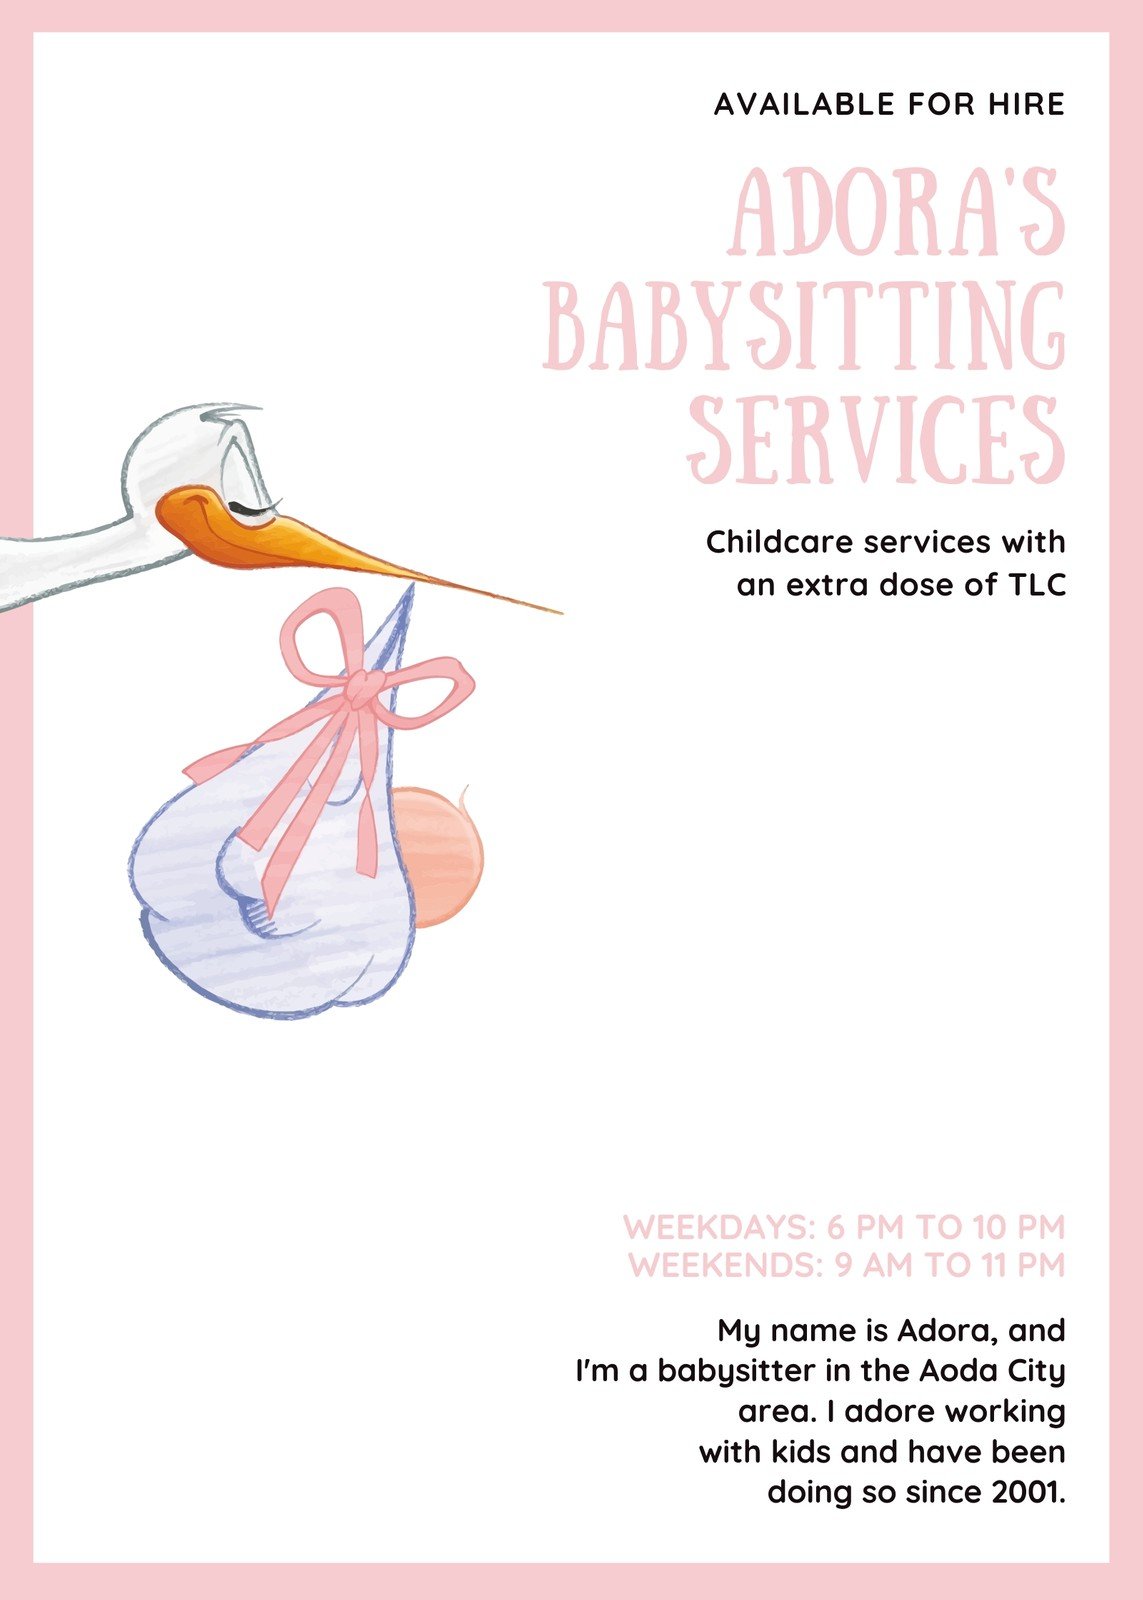 customize-17-babysitting-flyers-templates-online-canva